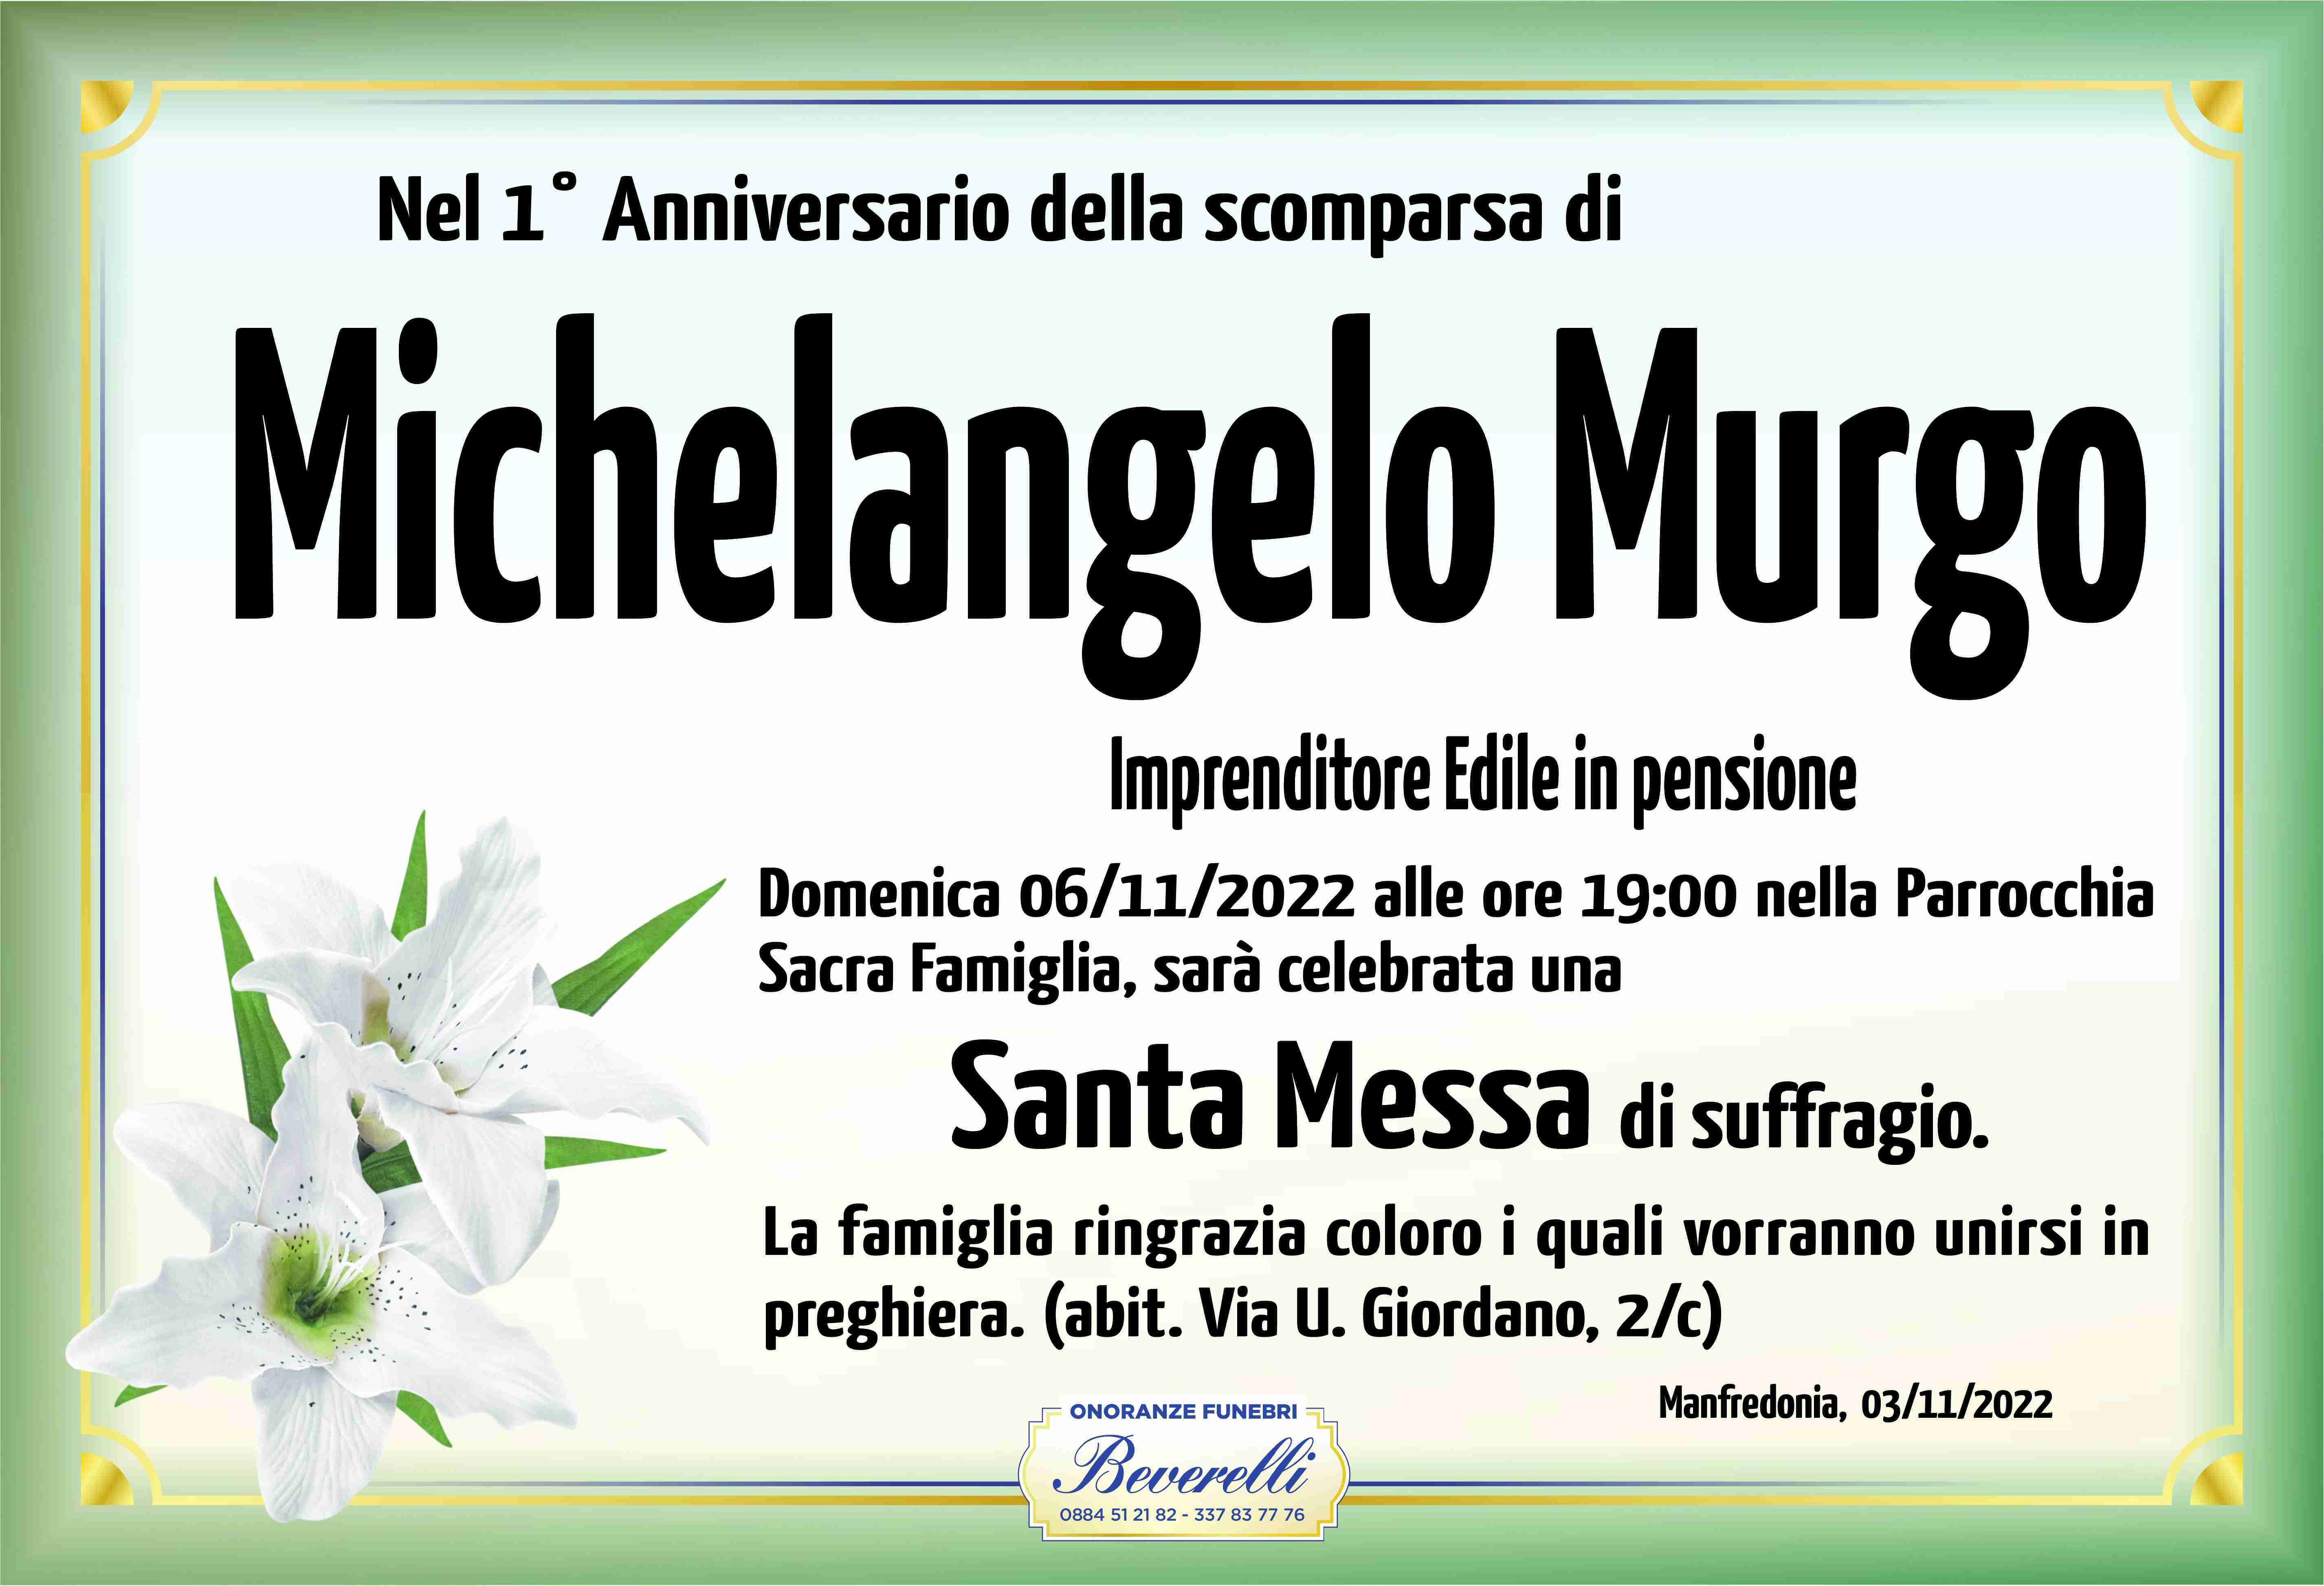 Michelangelo Murgo